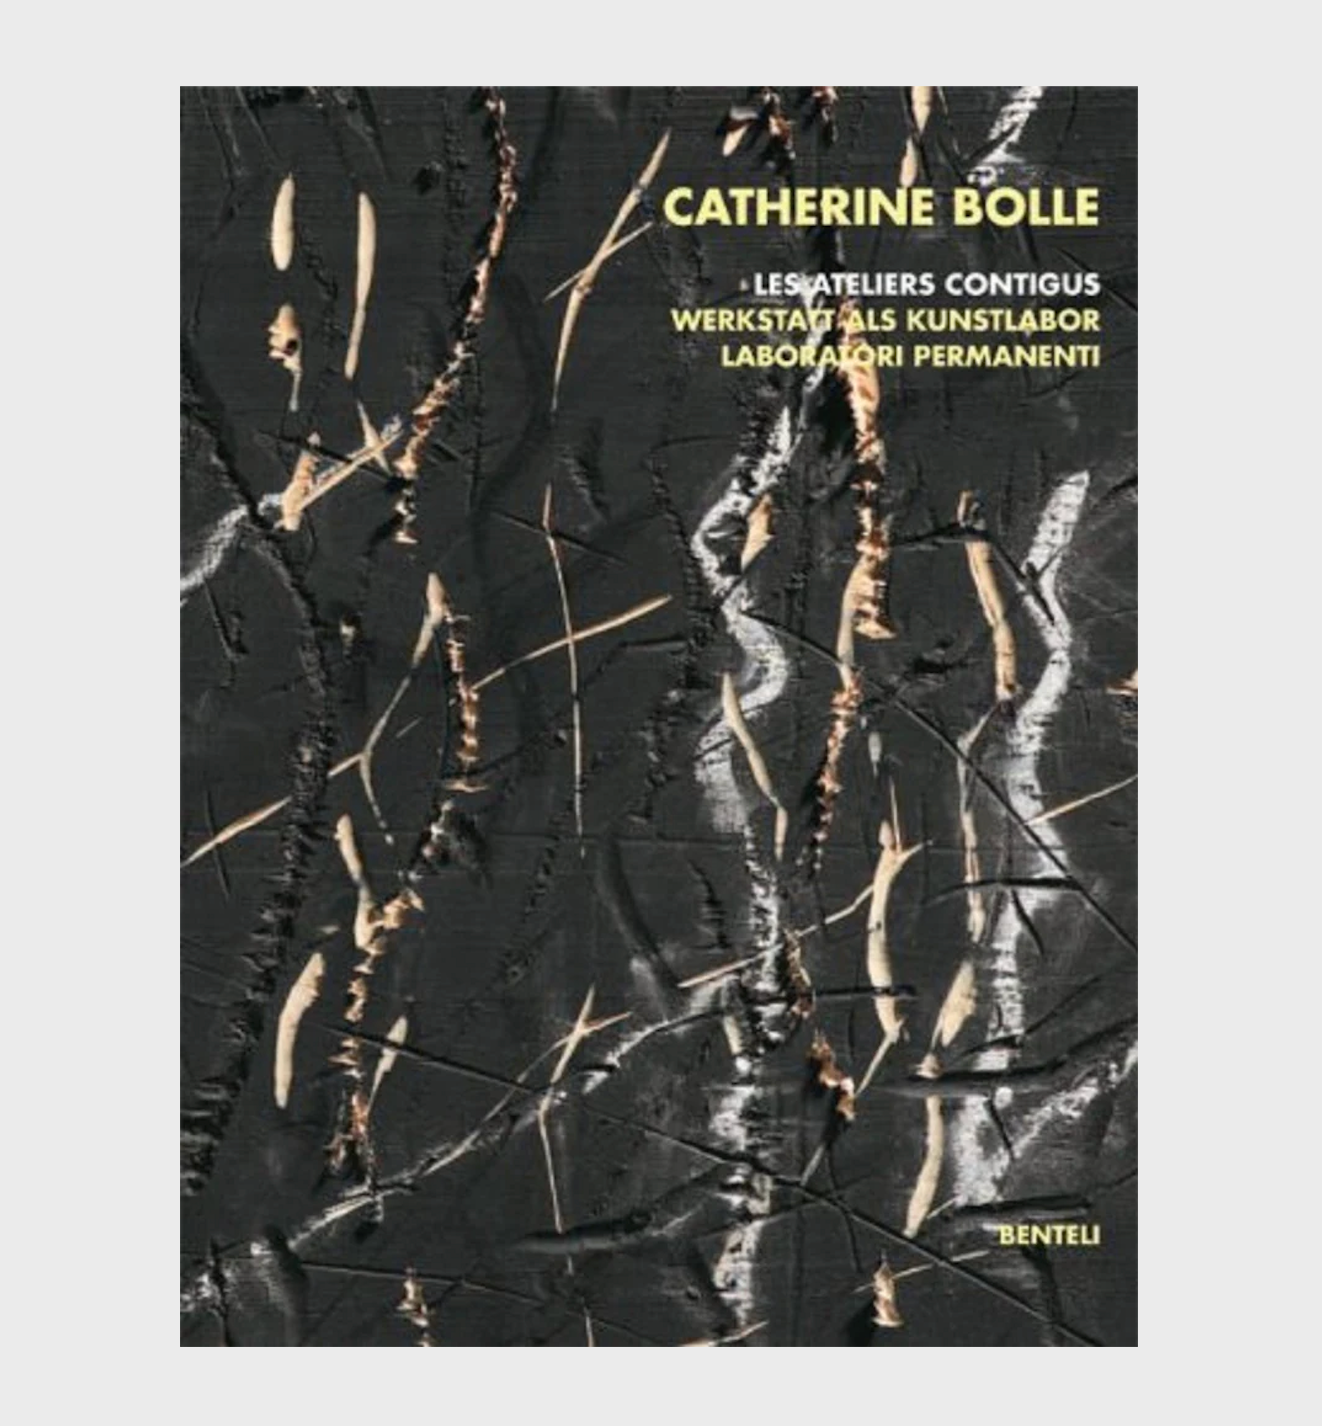 Catherine Bolle - Les ateliers contigus - 2011